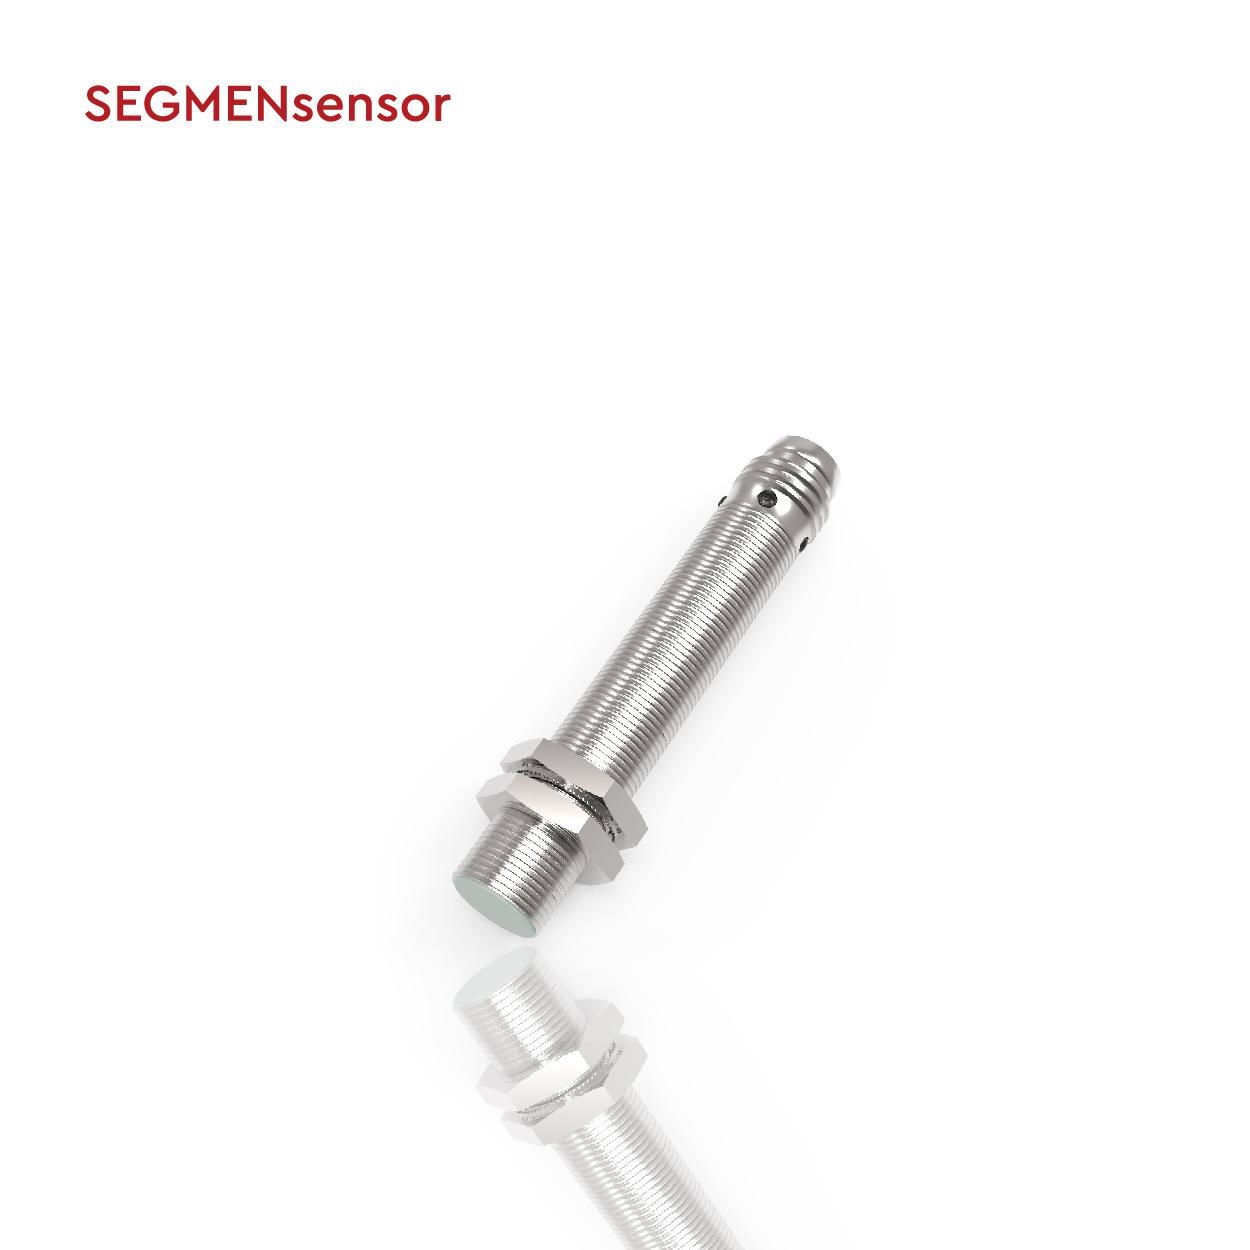 Segmensensor Inductive Sensor extended sensing distance LR08